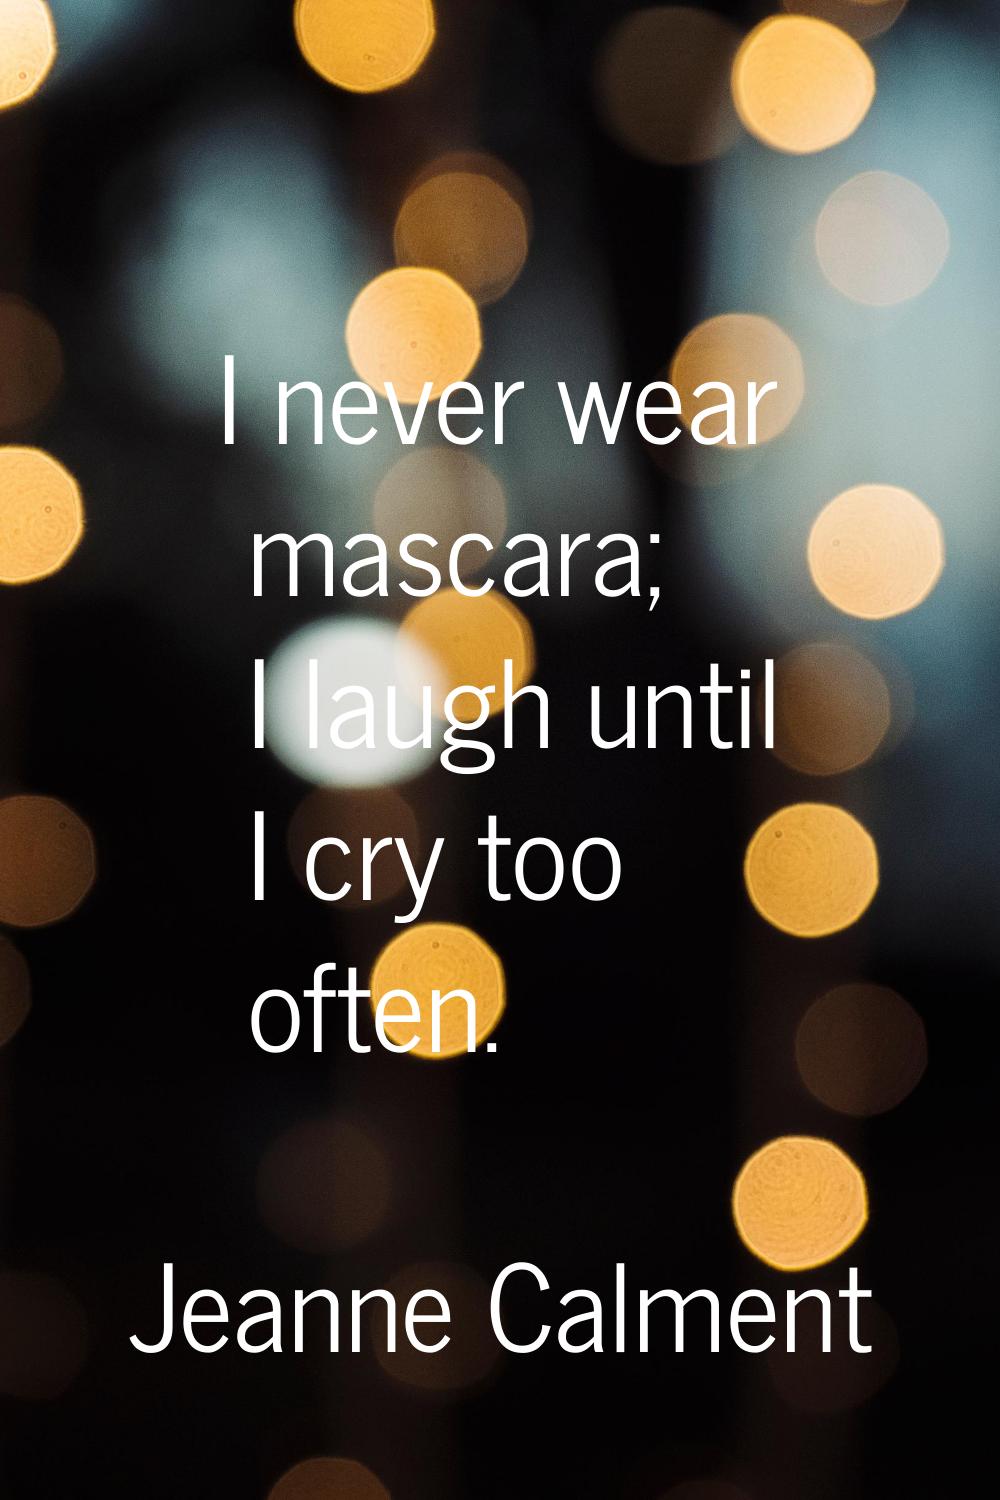 I never wear mascara; I laugh until I cry too often.